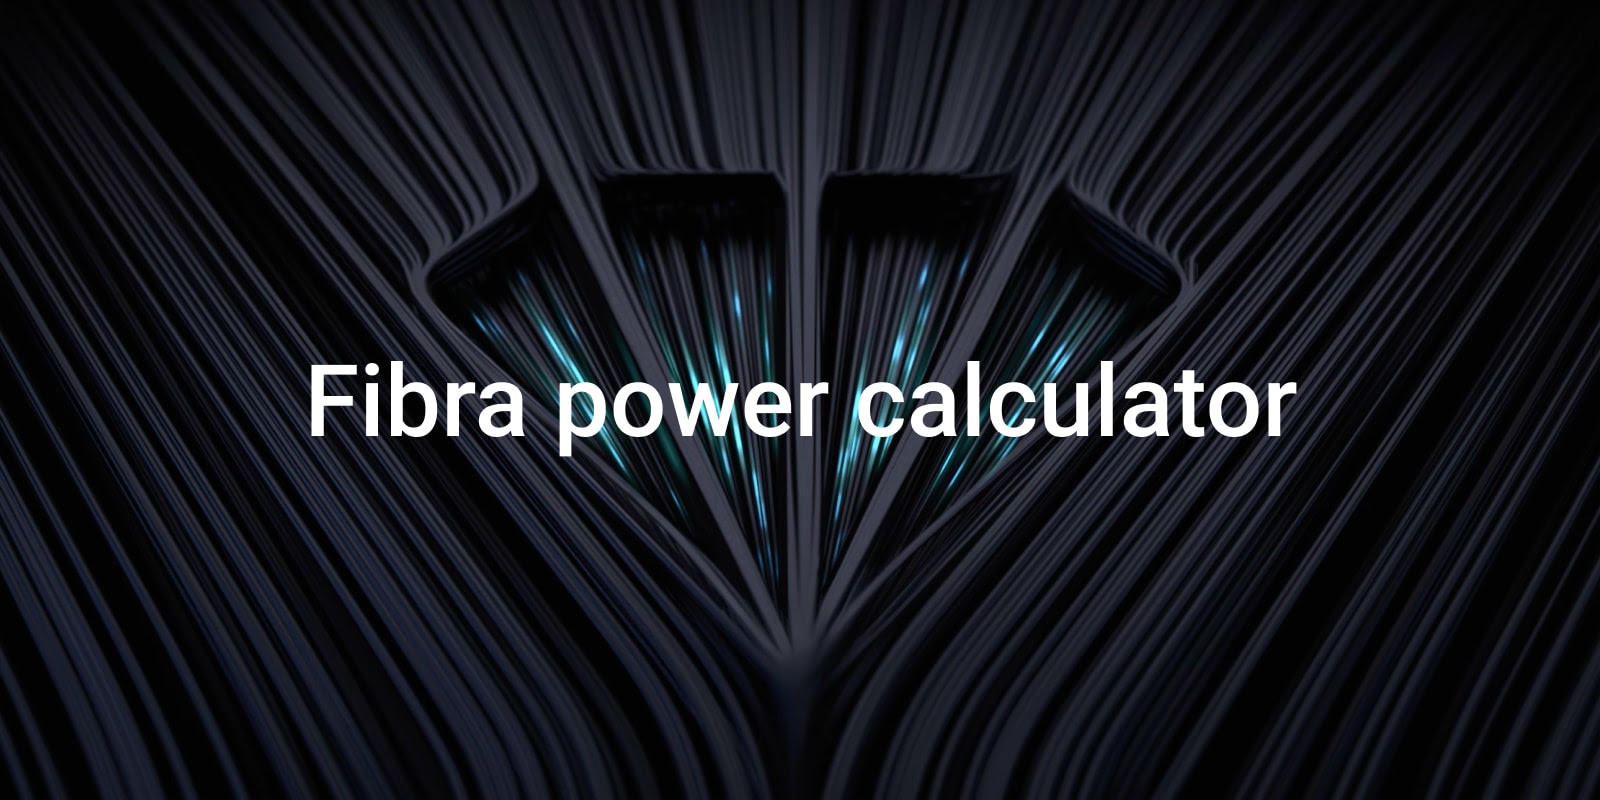 Fibra power calculator